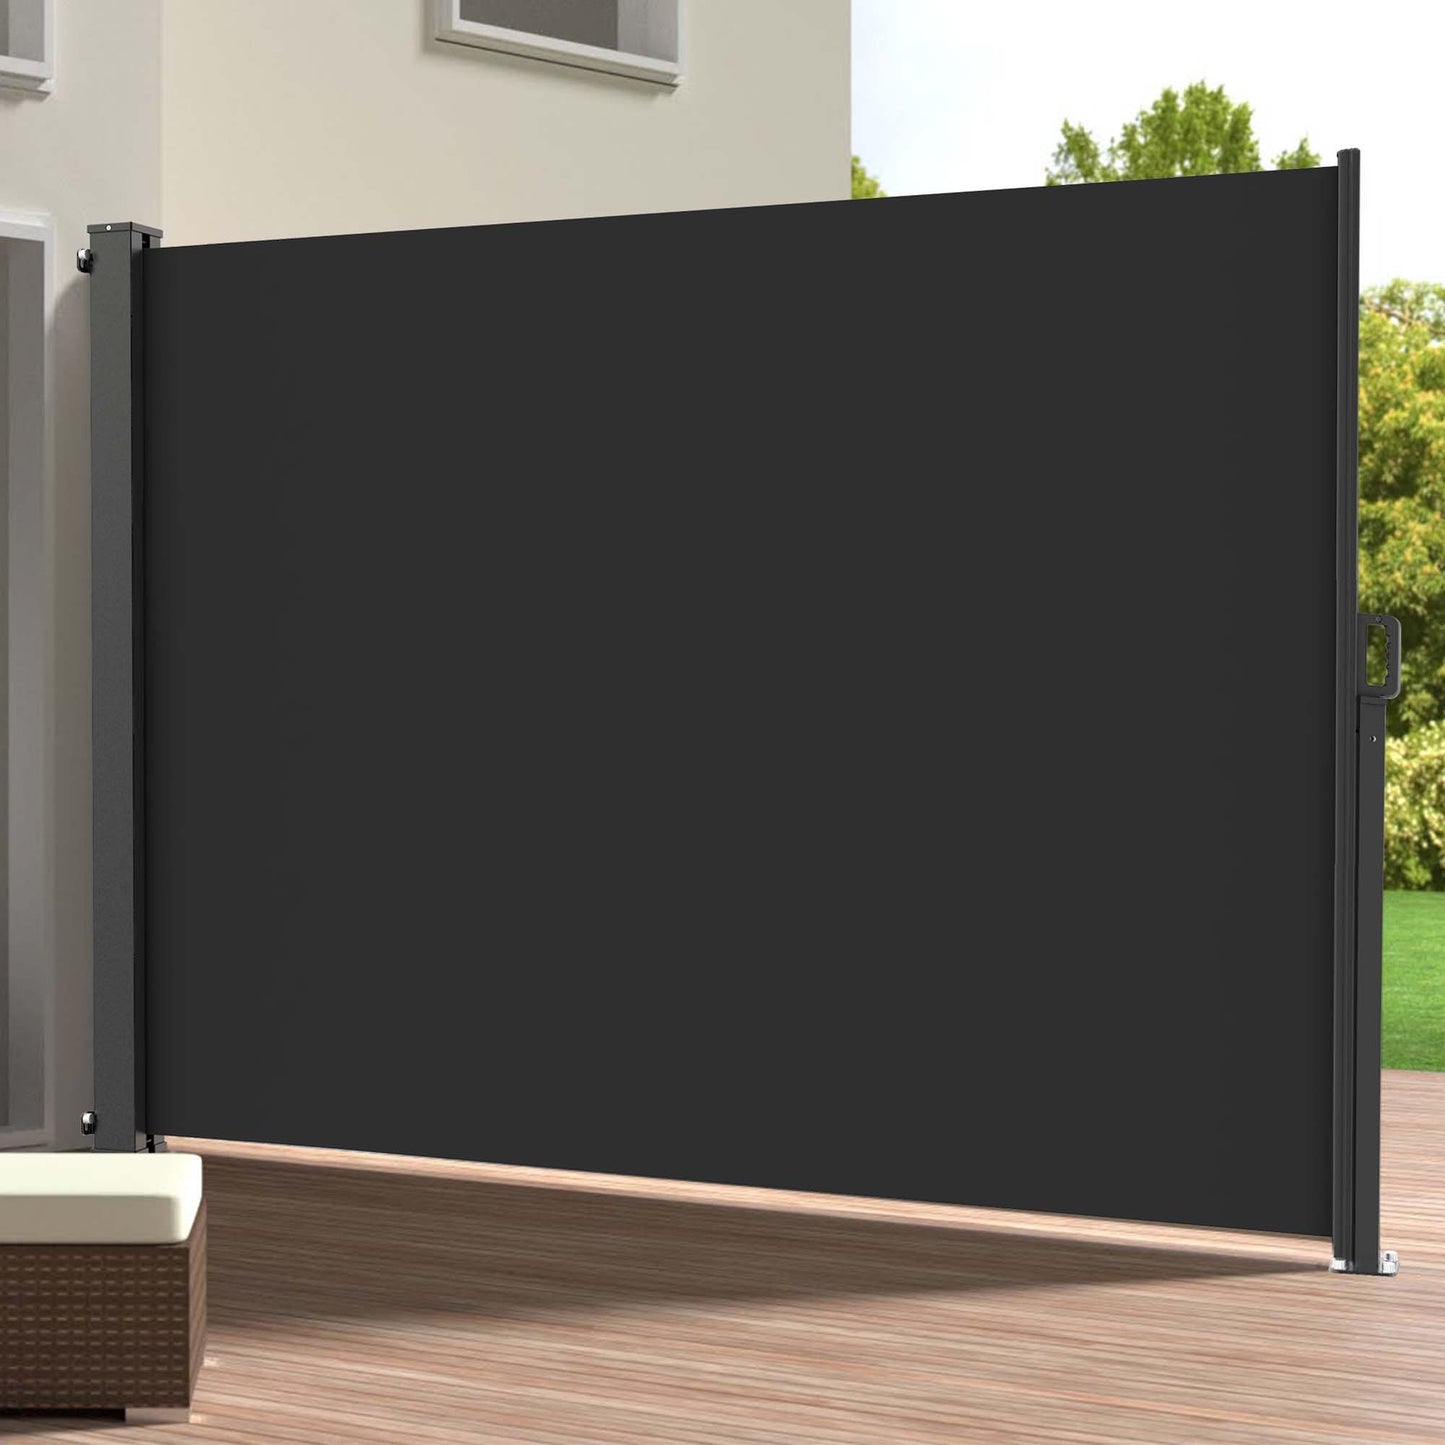 PHOENIX Outdoor Blackout Retractable Screen 160x300cm Gray